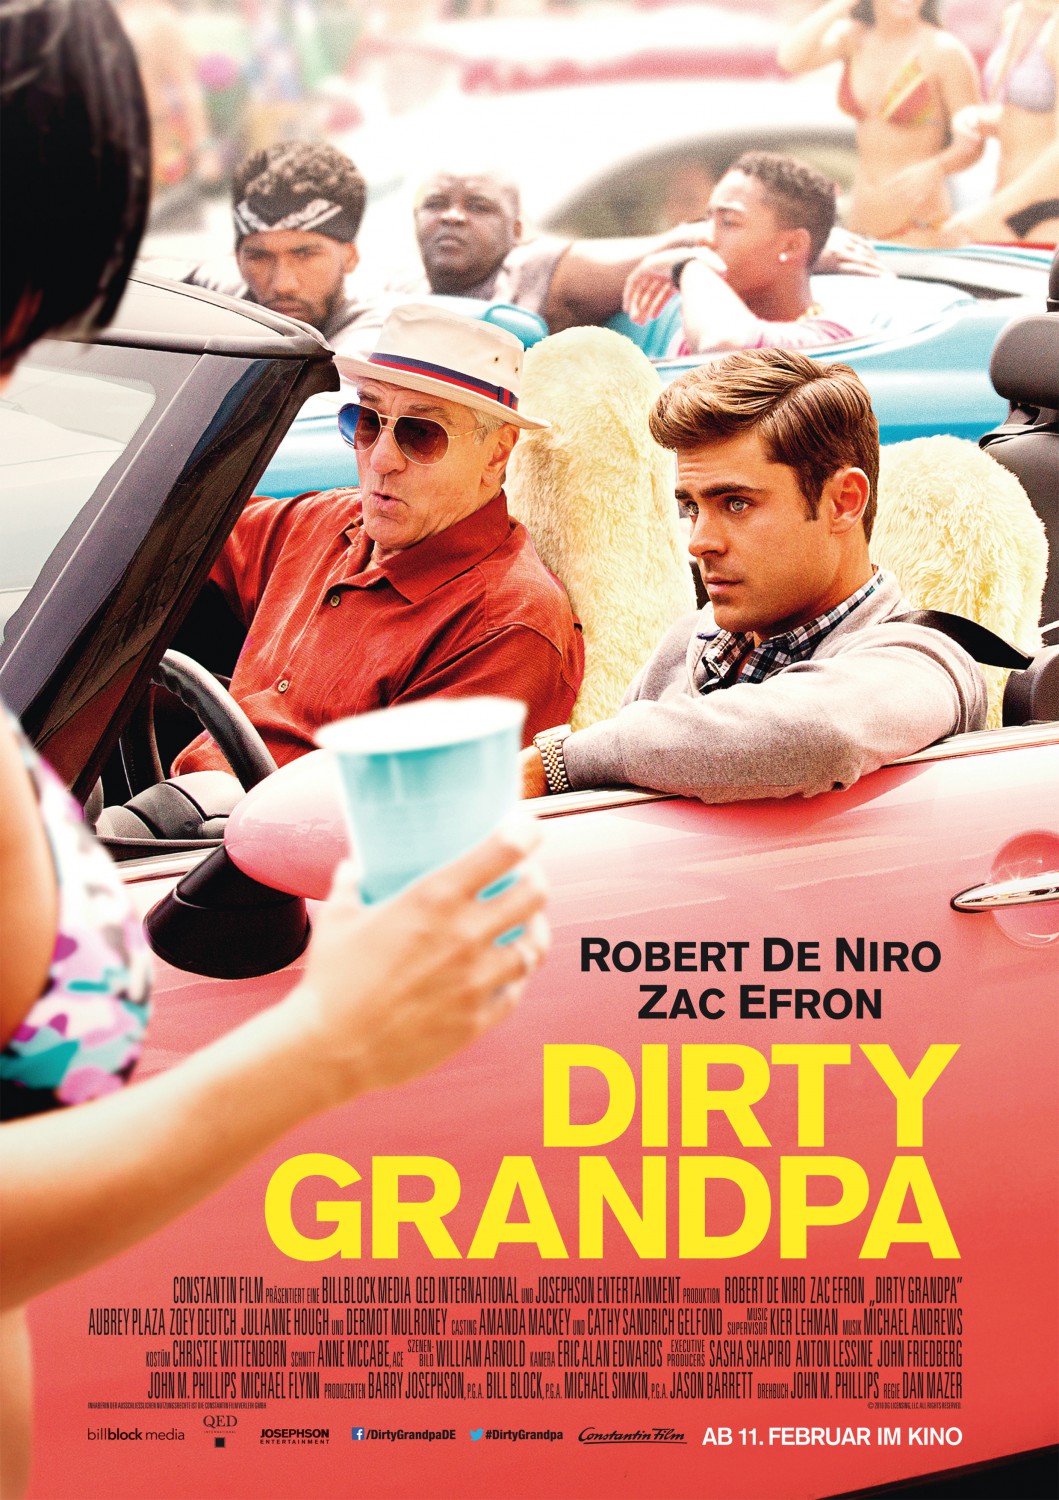 Dirty Grandpa (#11 of 11): Extra Large Movie Poster Image - IMP Awards